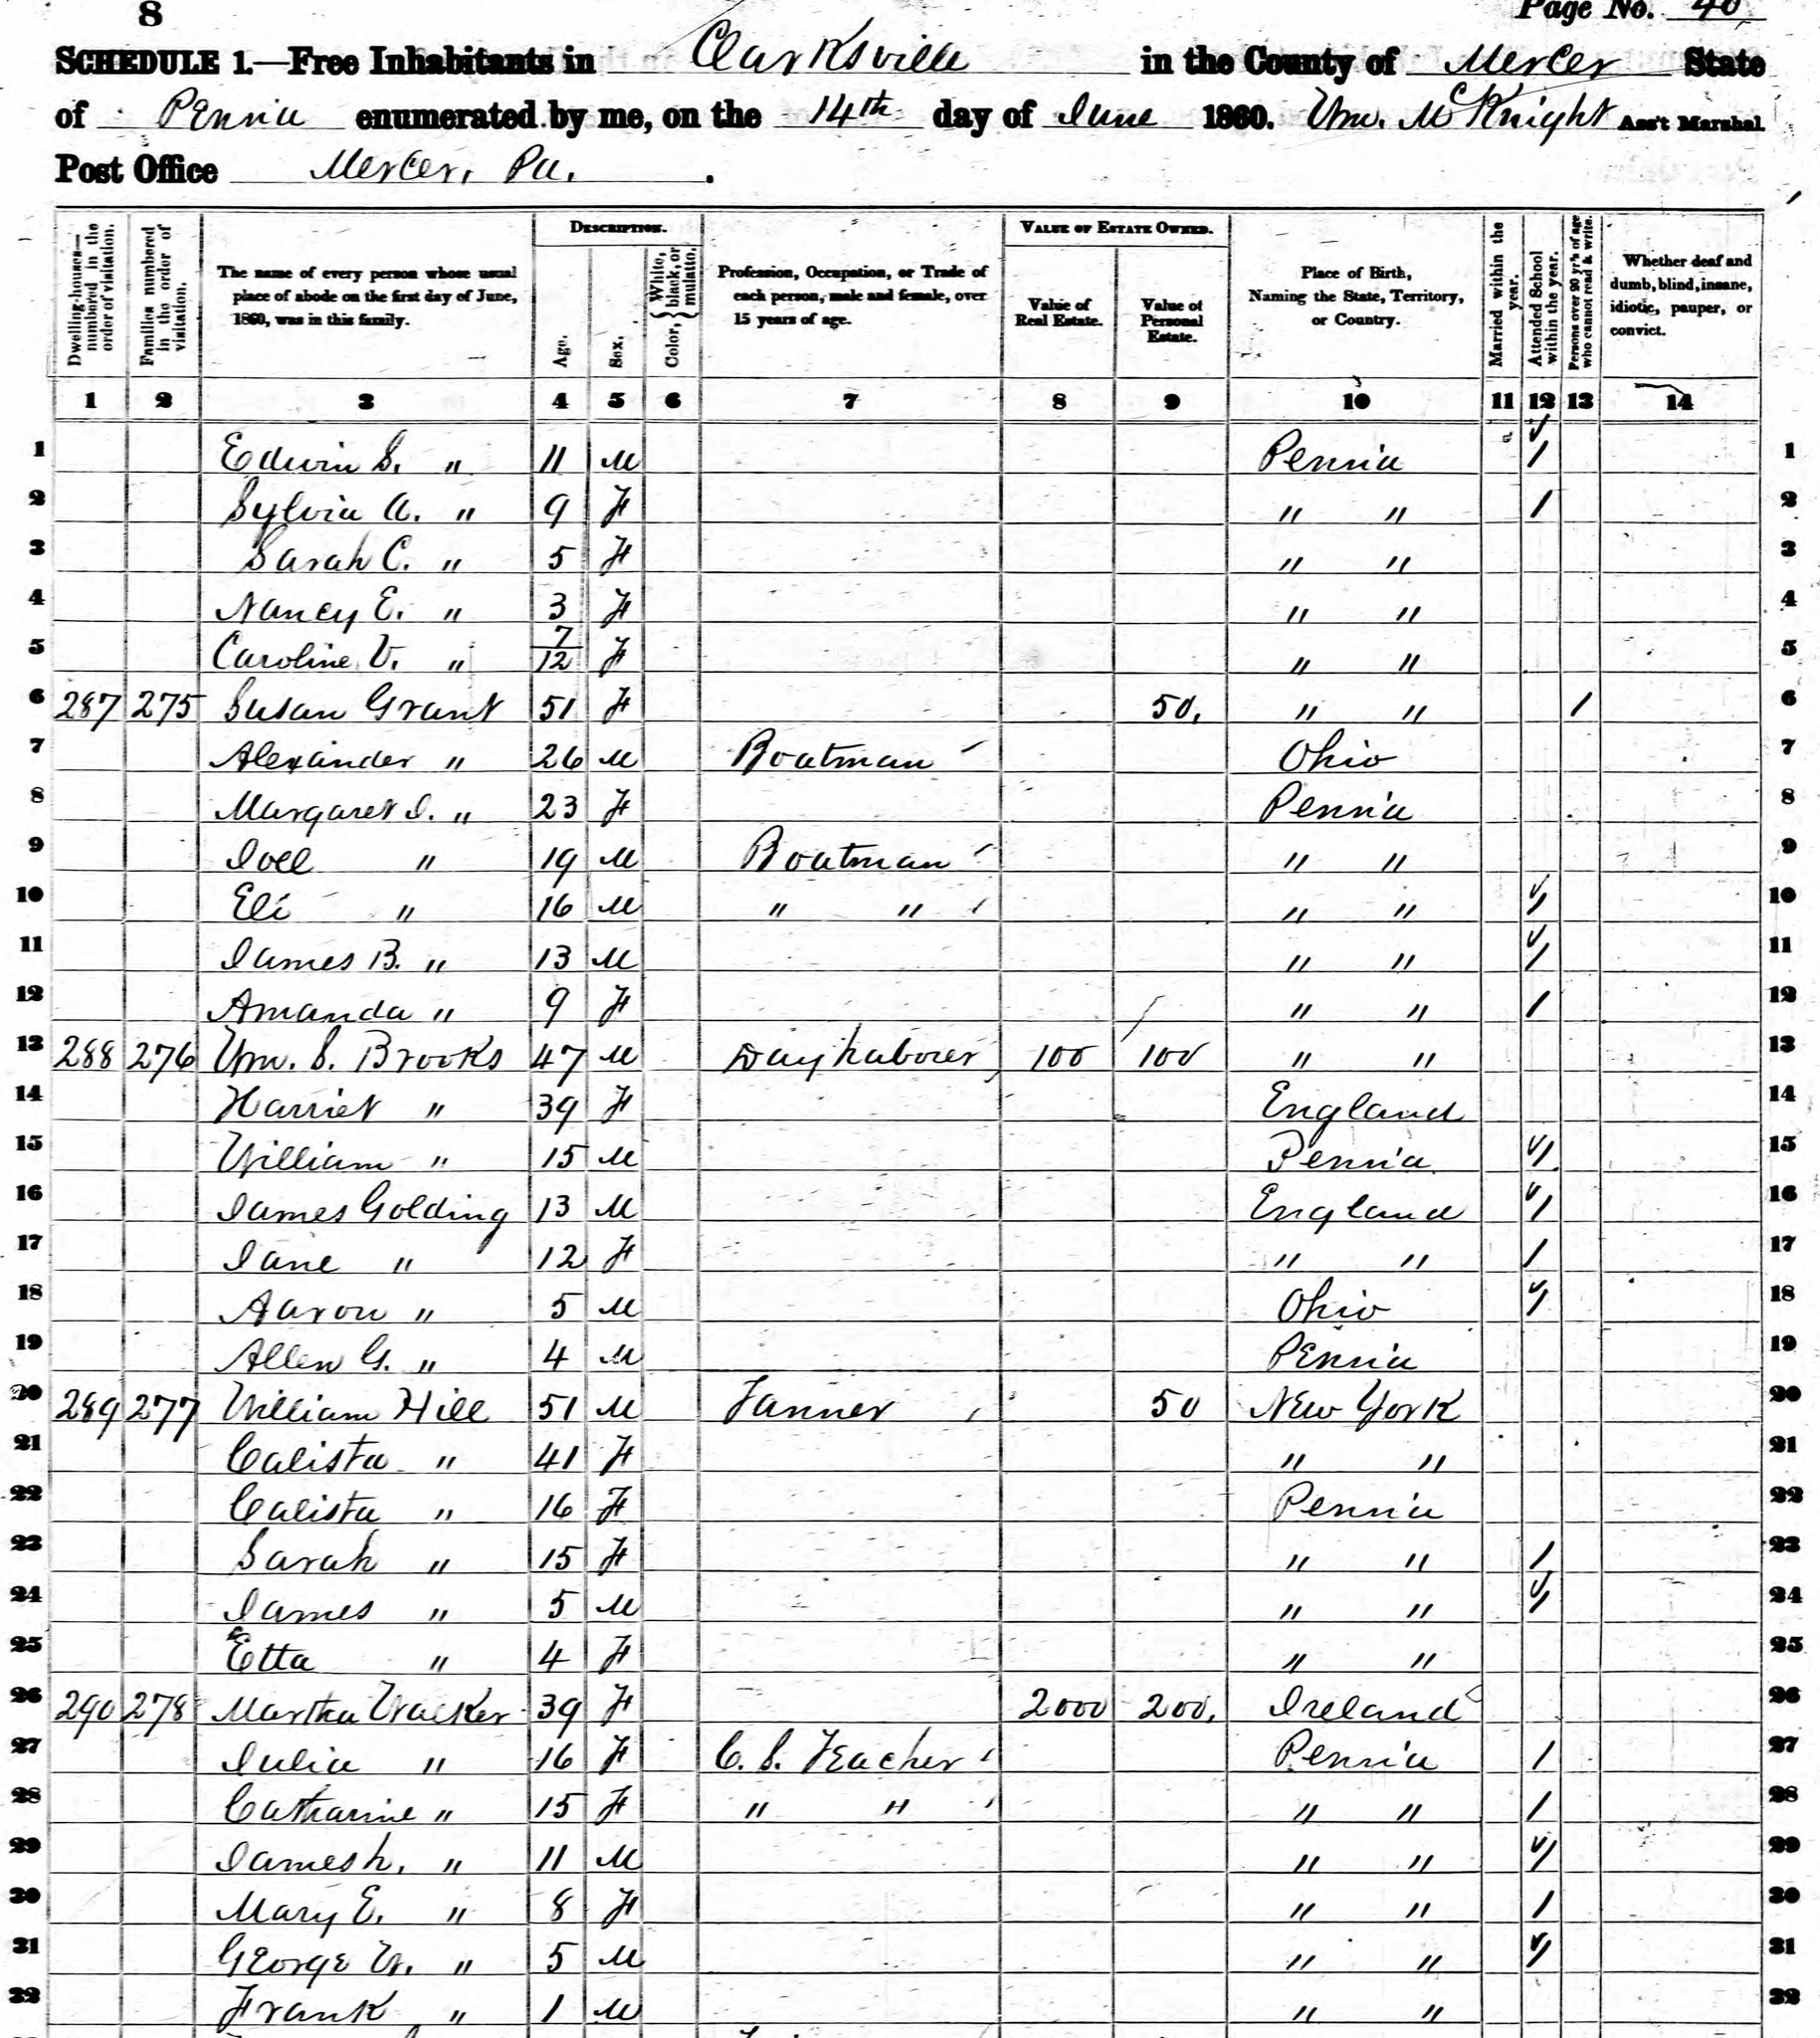 Martha Walker 1860 Census in Clarksville PA